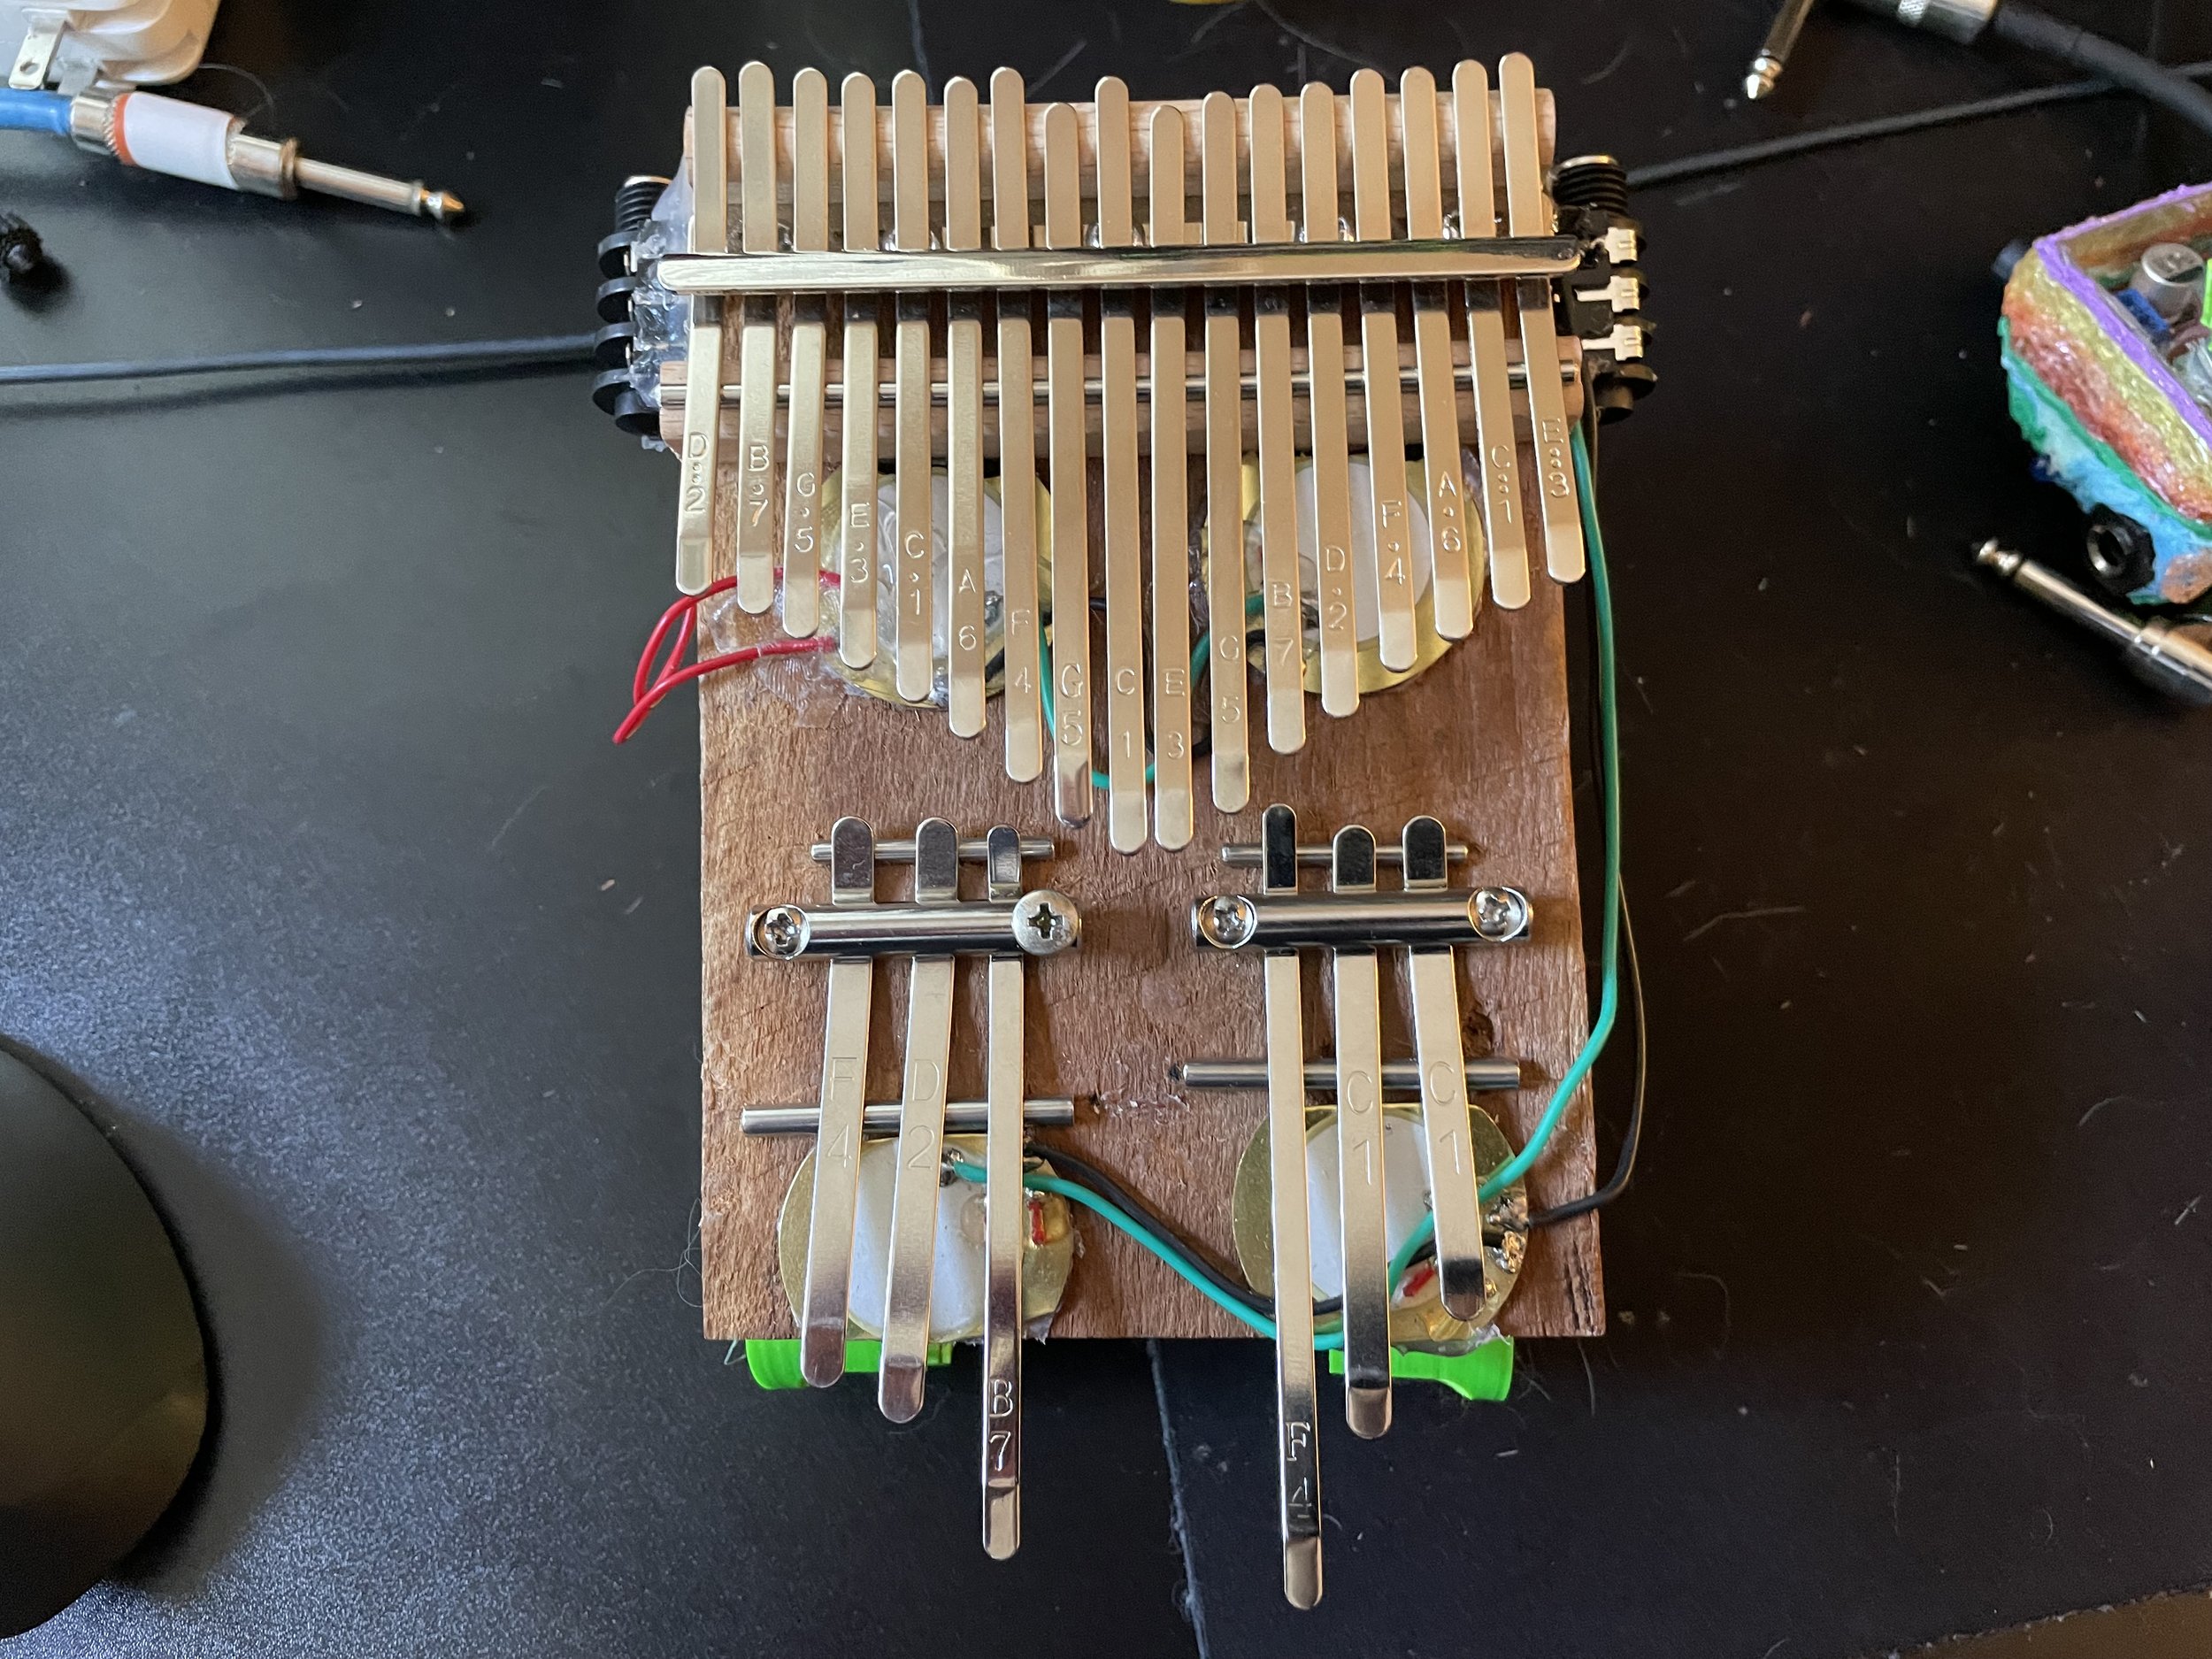 circuit-bent-instruments-ok-housecat